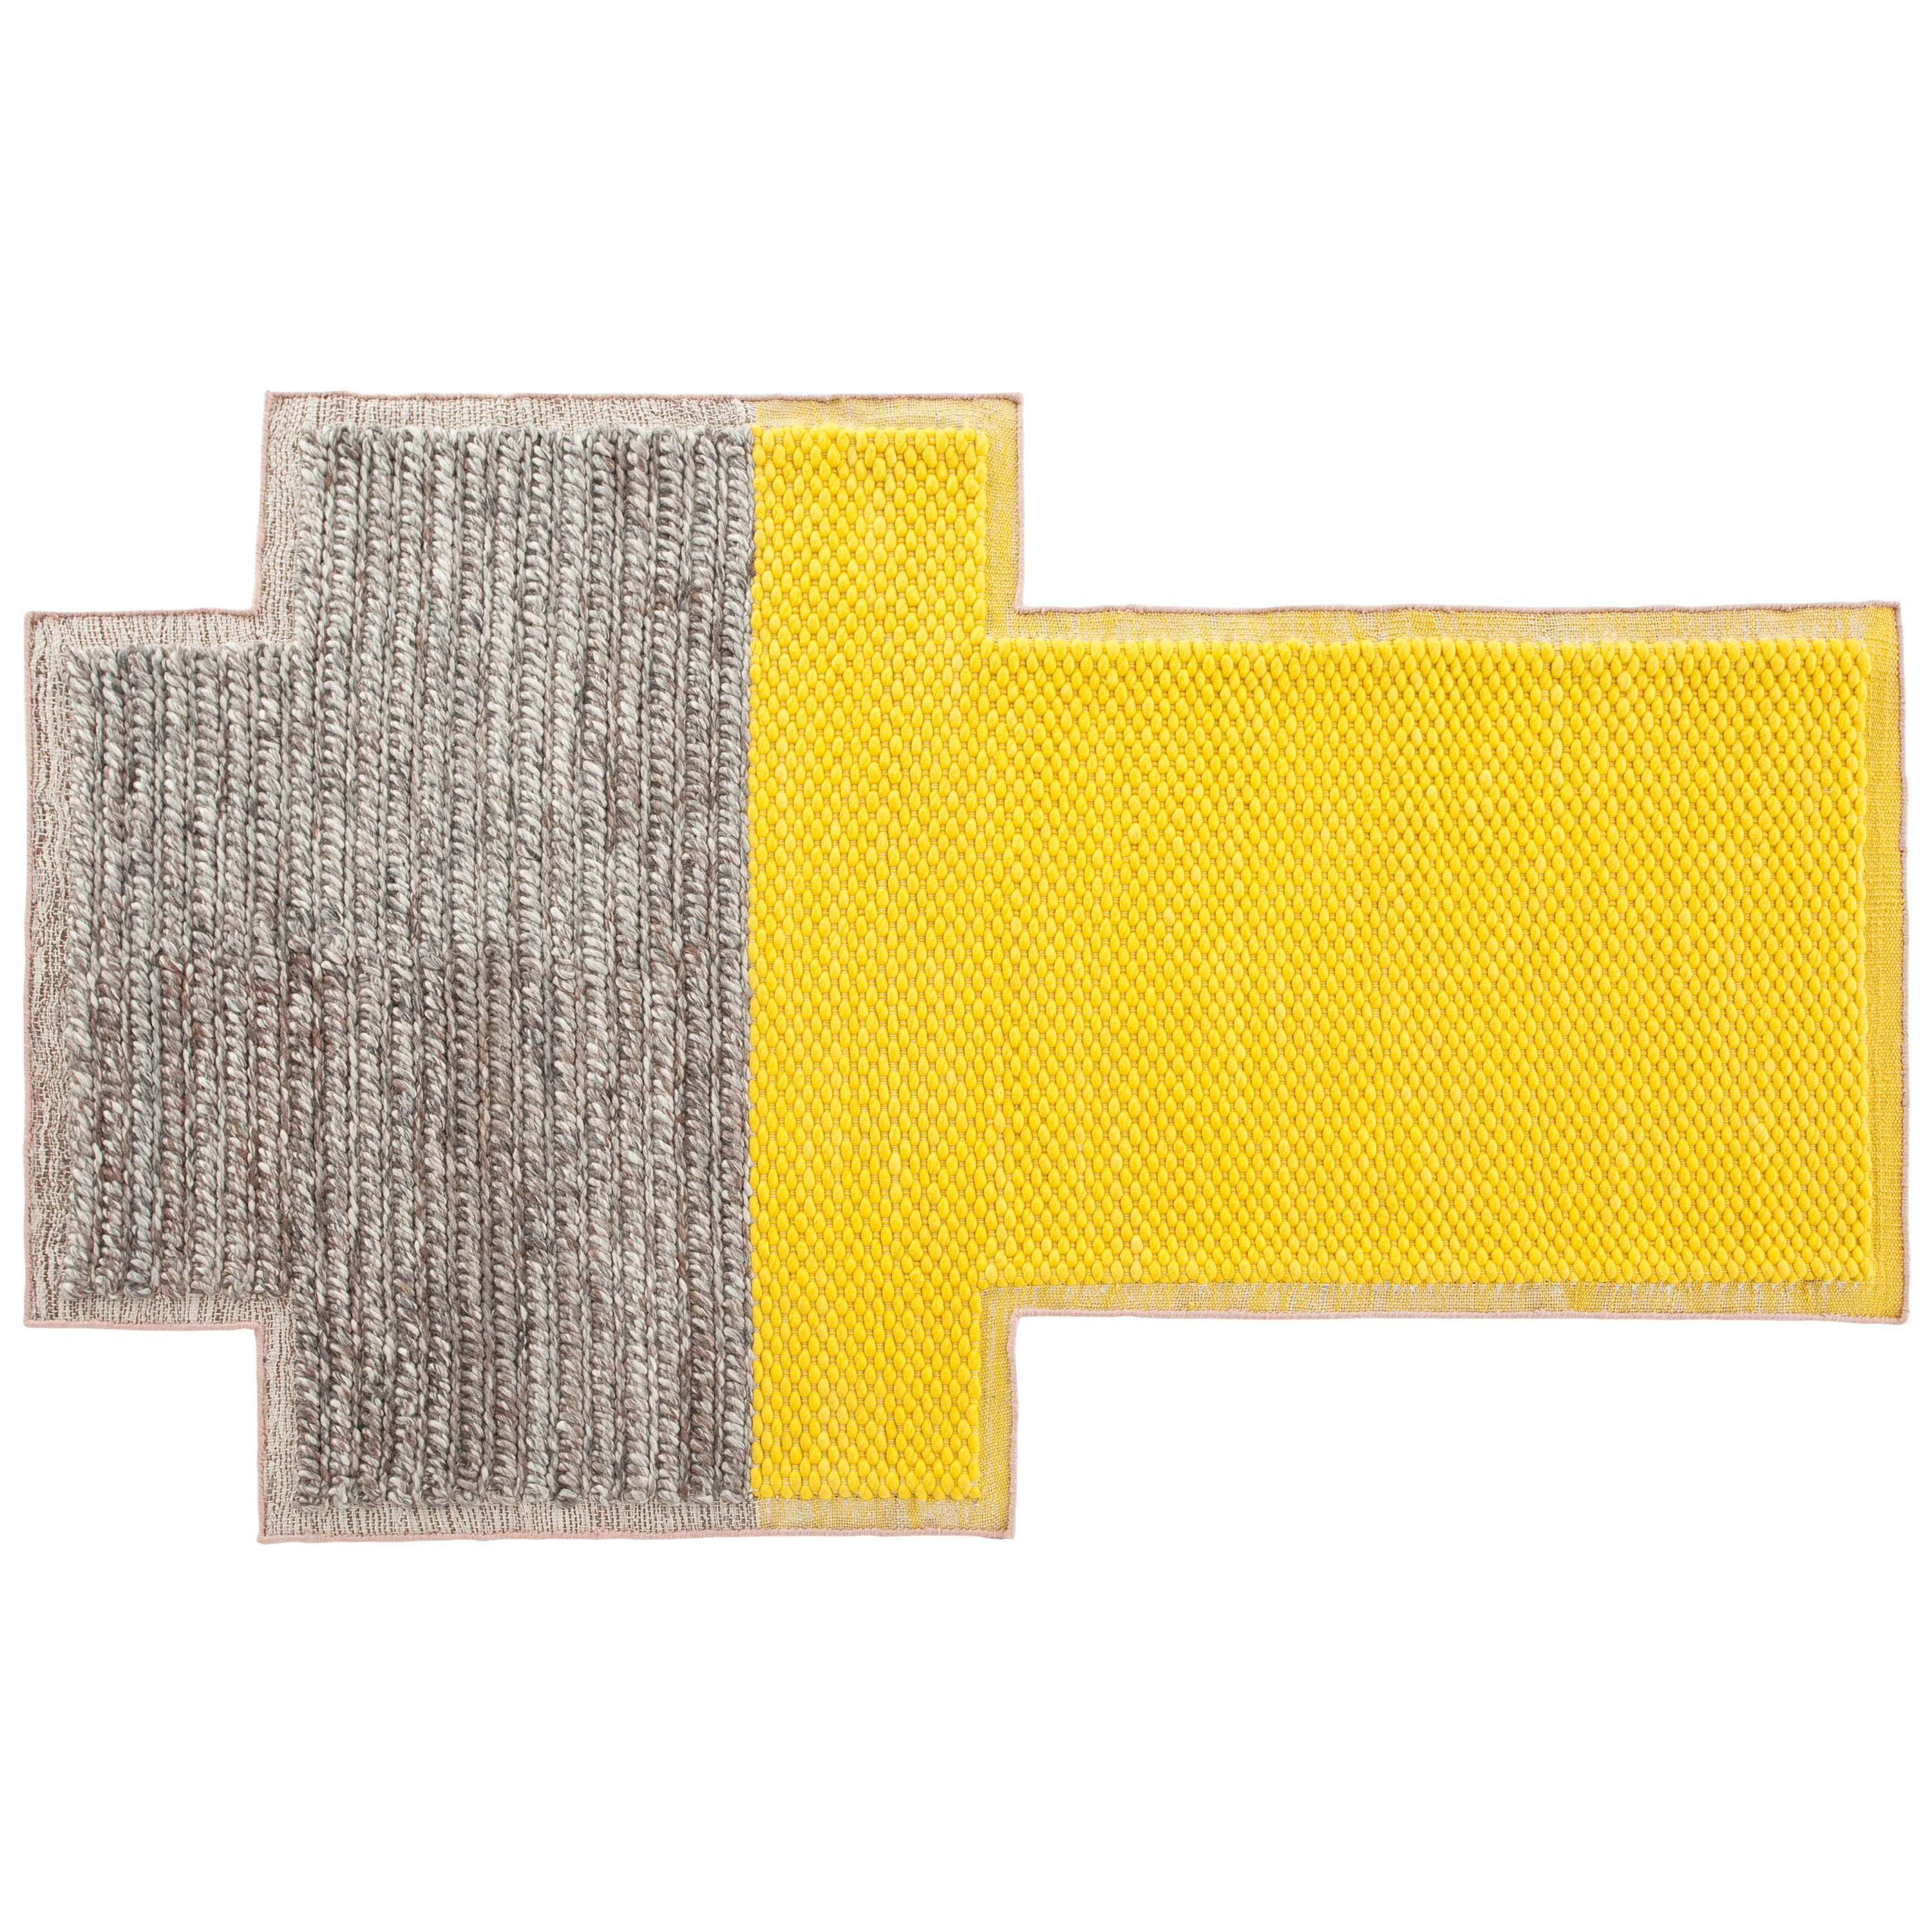 GAN Mangas Space Medium Rectangular Rug Plait in Yellow by Patricia Urquiola For Sale